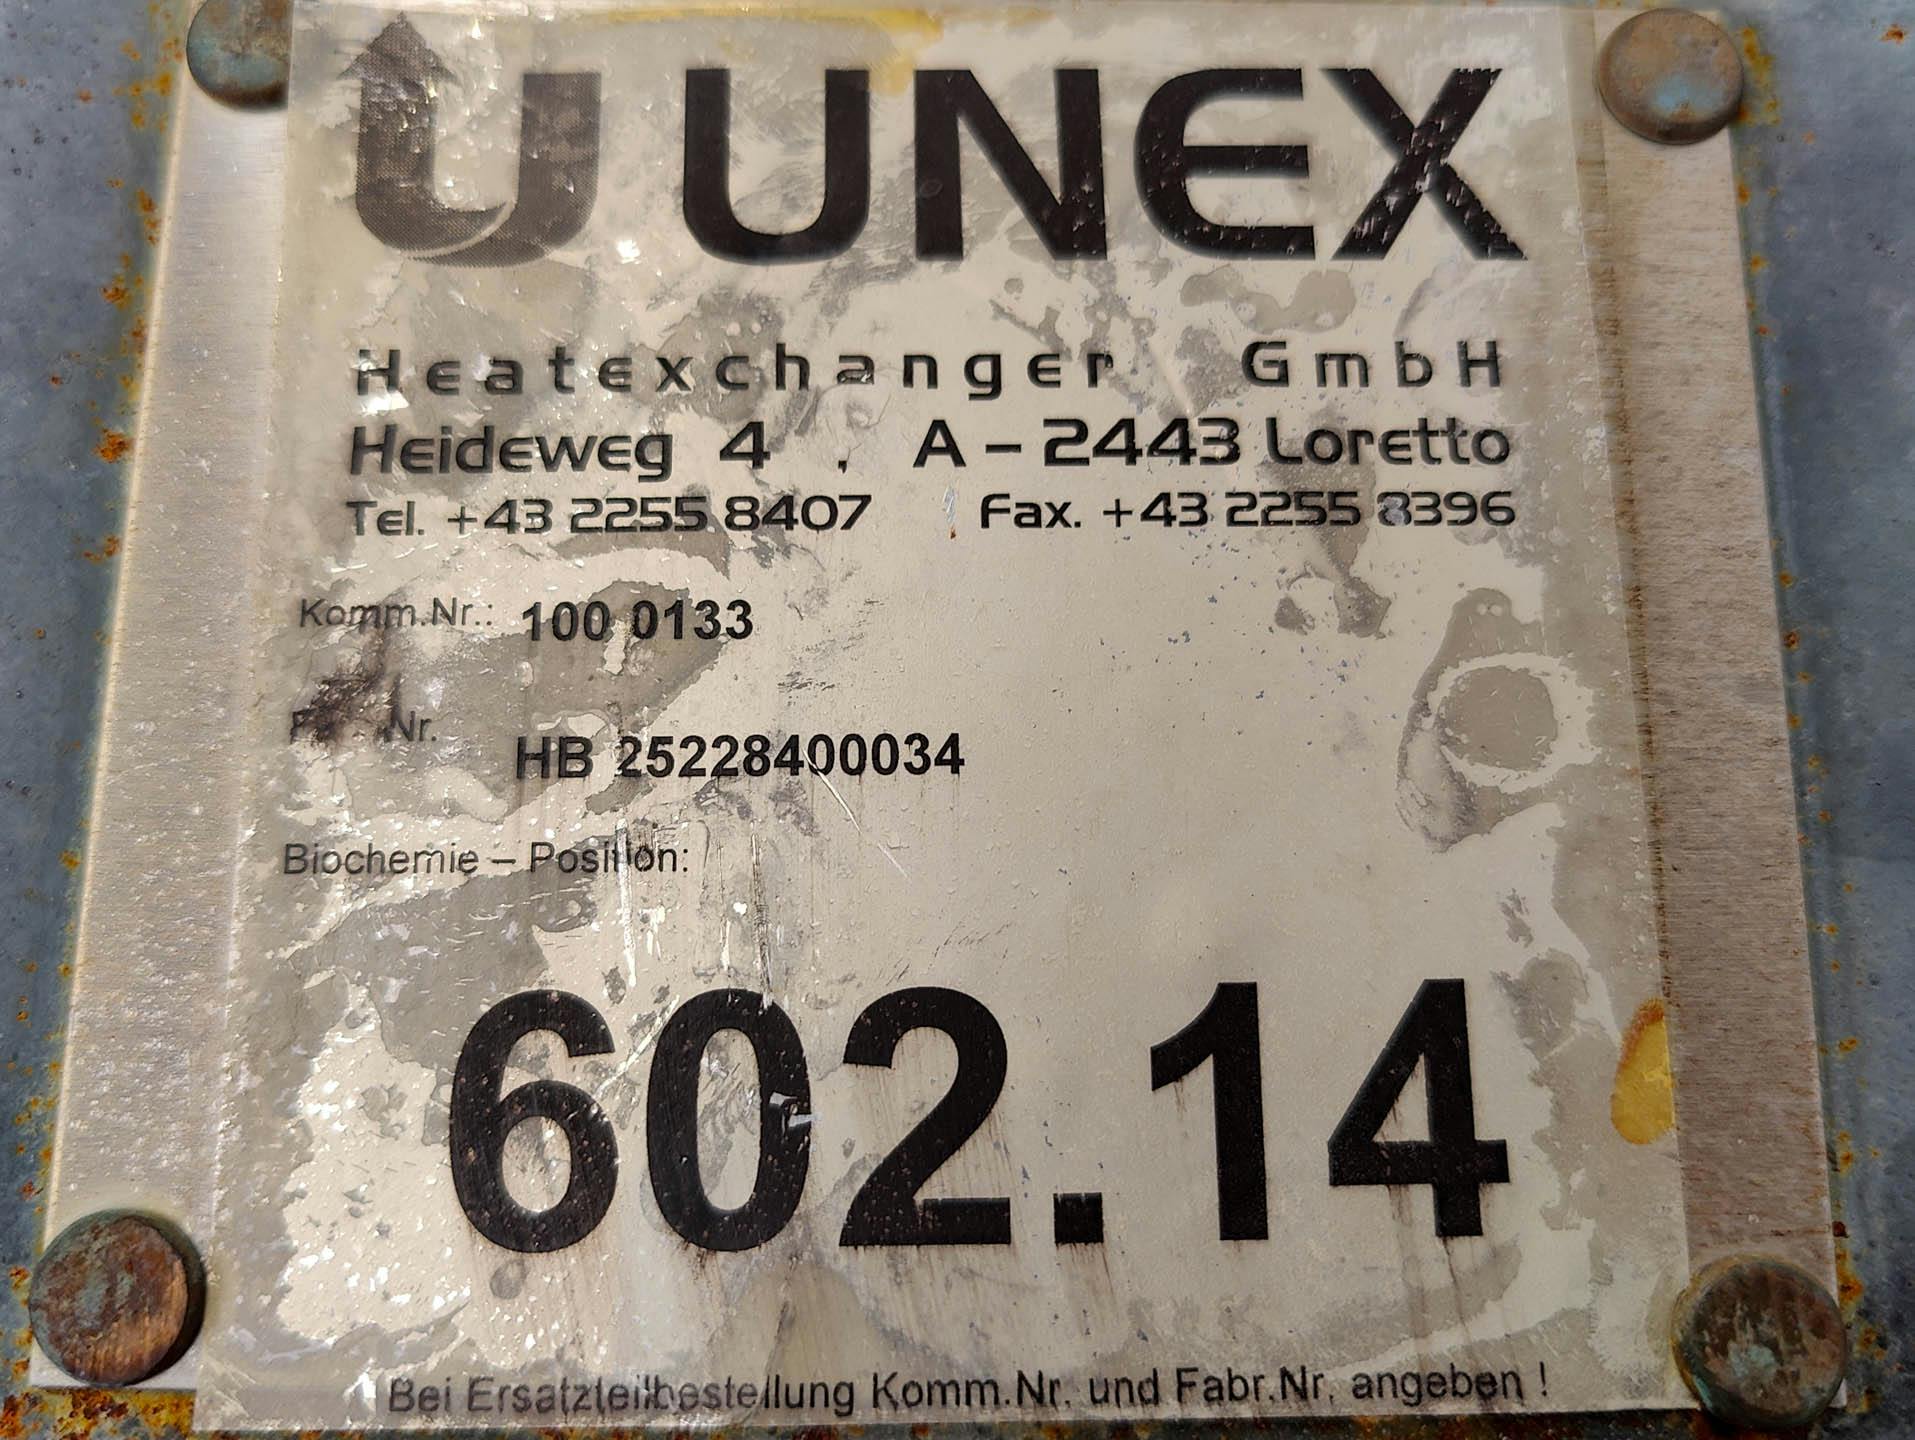 Unex Hybrid, fully welded plate heat exchanger - Platen warmtewisselaar - image 5